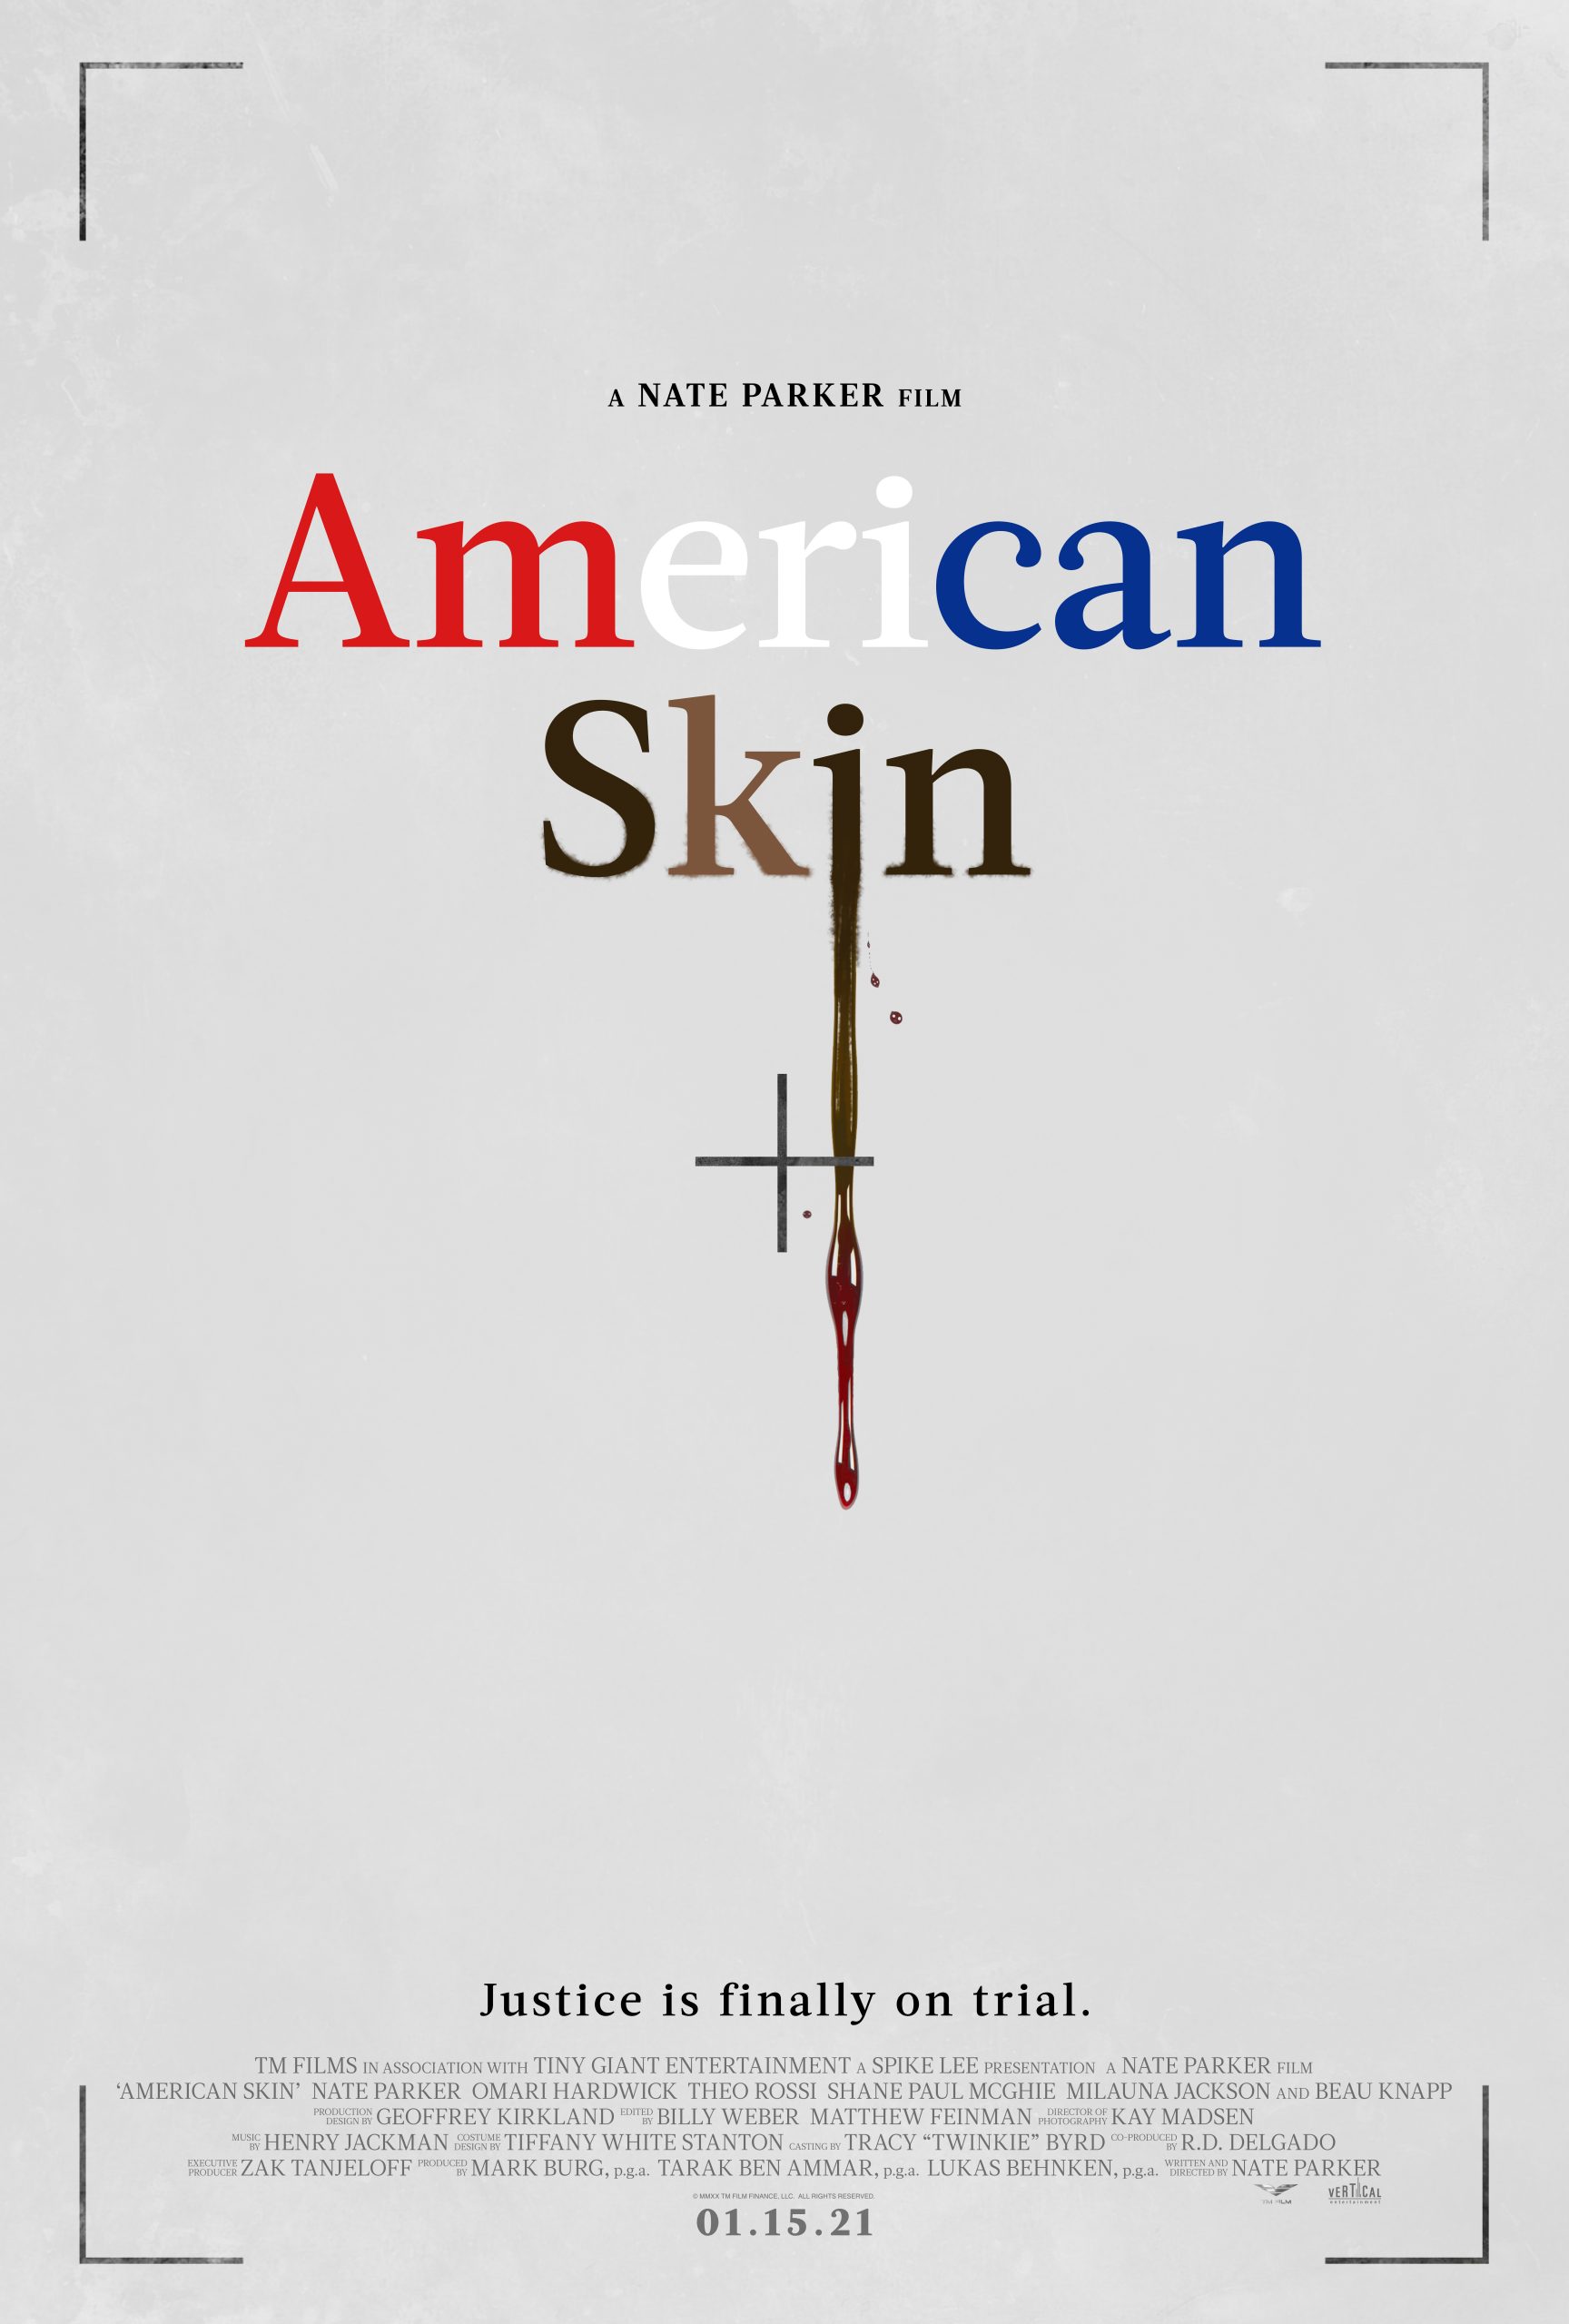 New Movie: Spike Lee’s American Skin